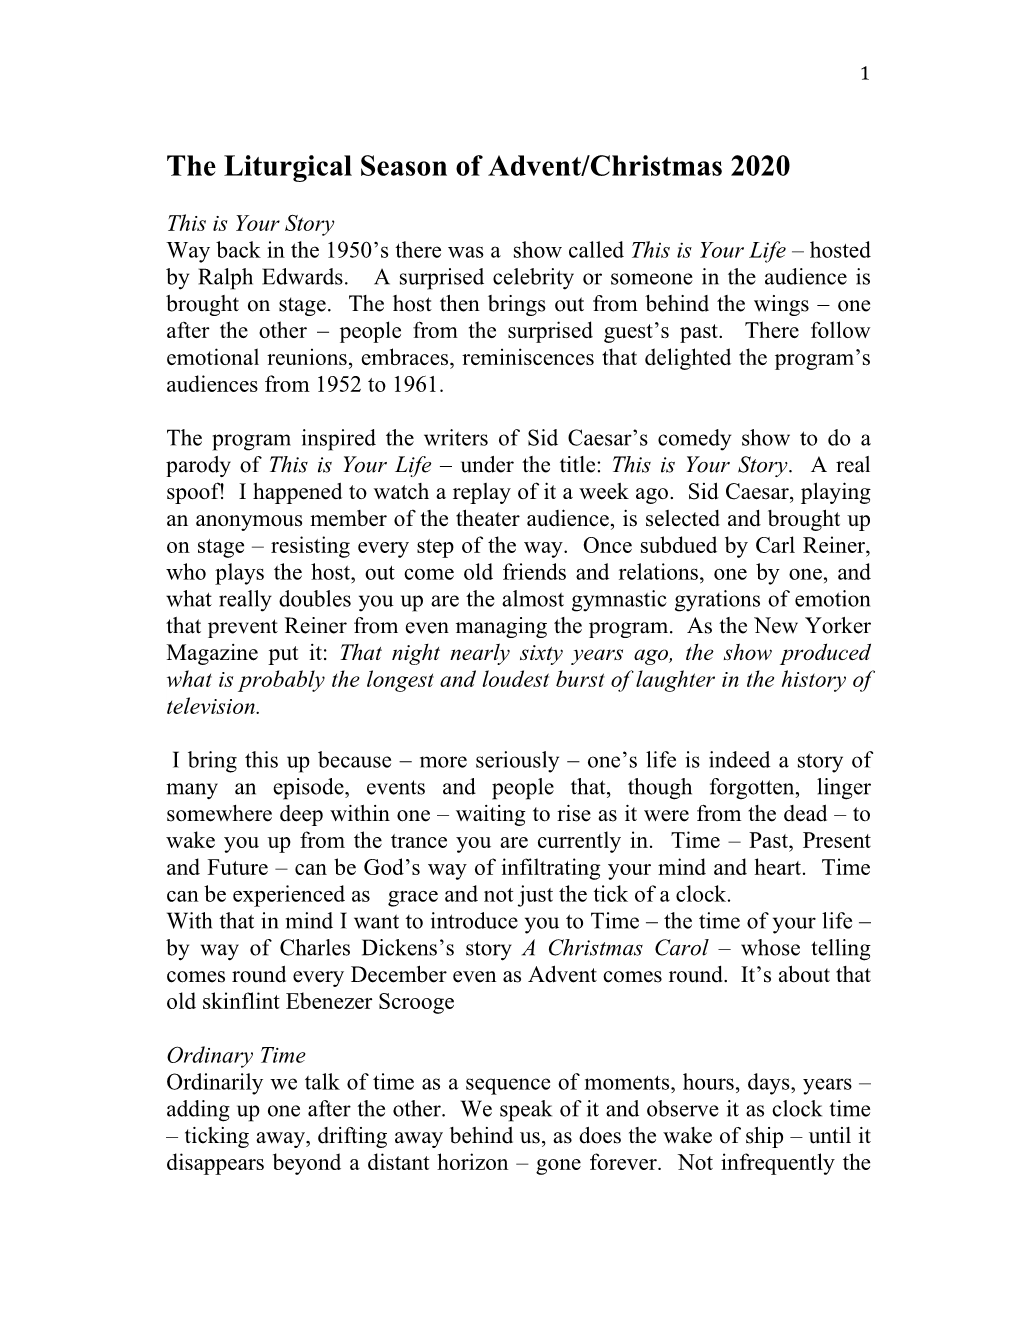 The Liturgical Season of Advent/Christmas 2020